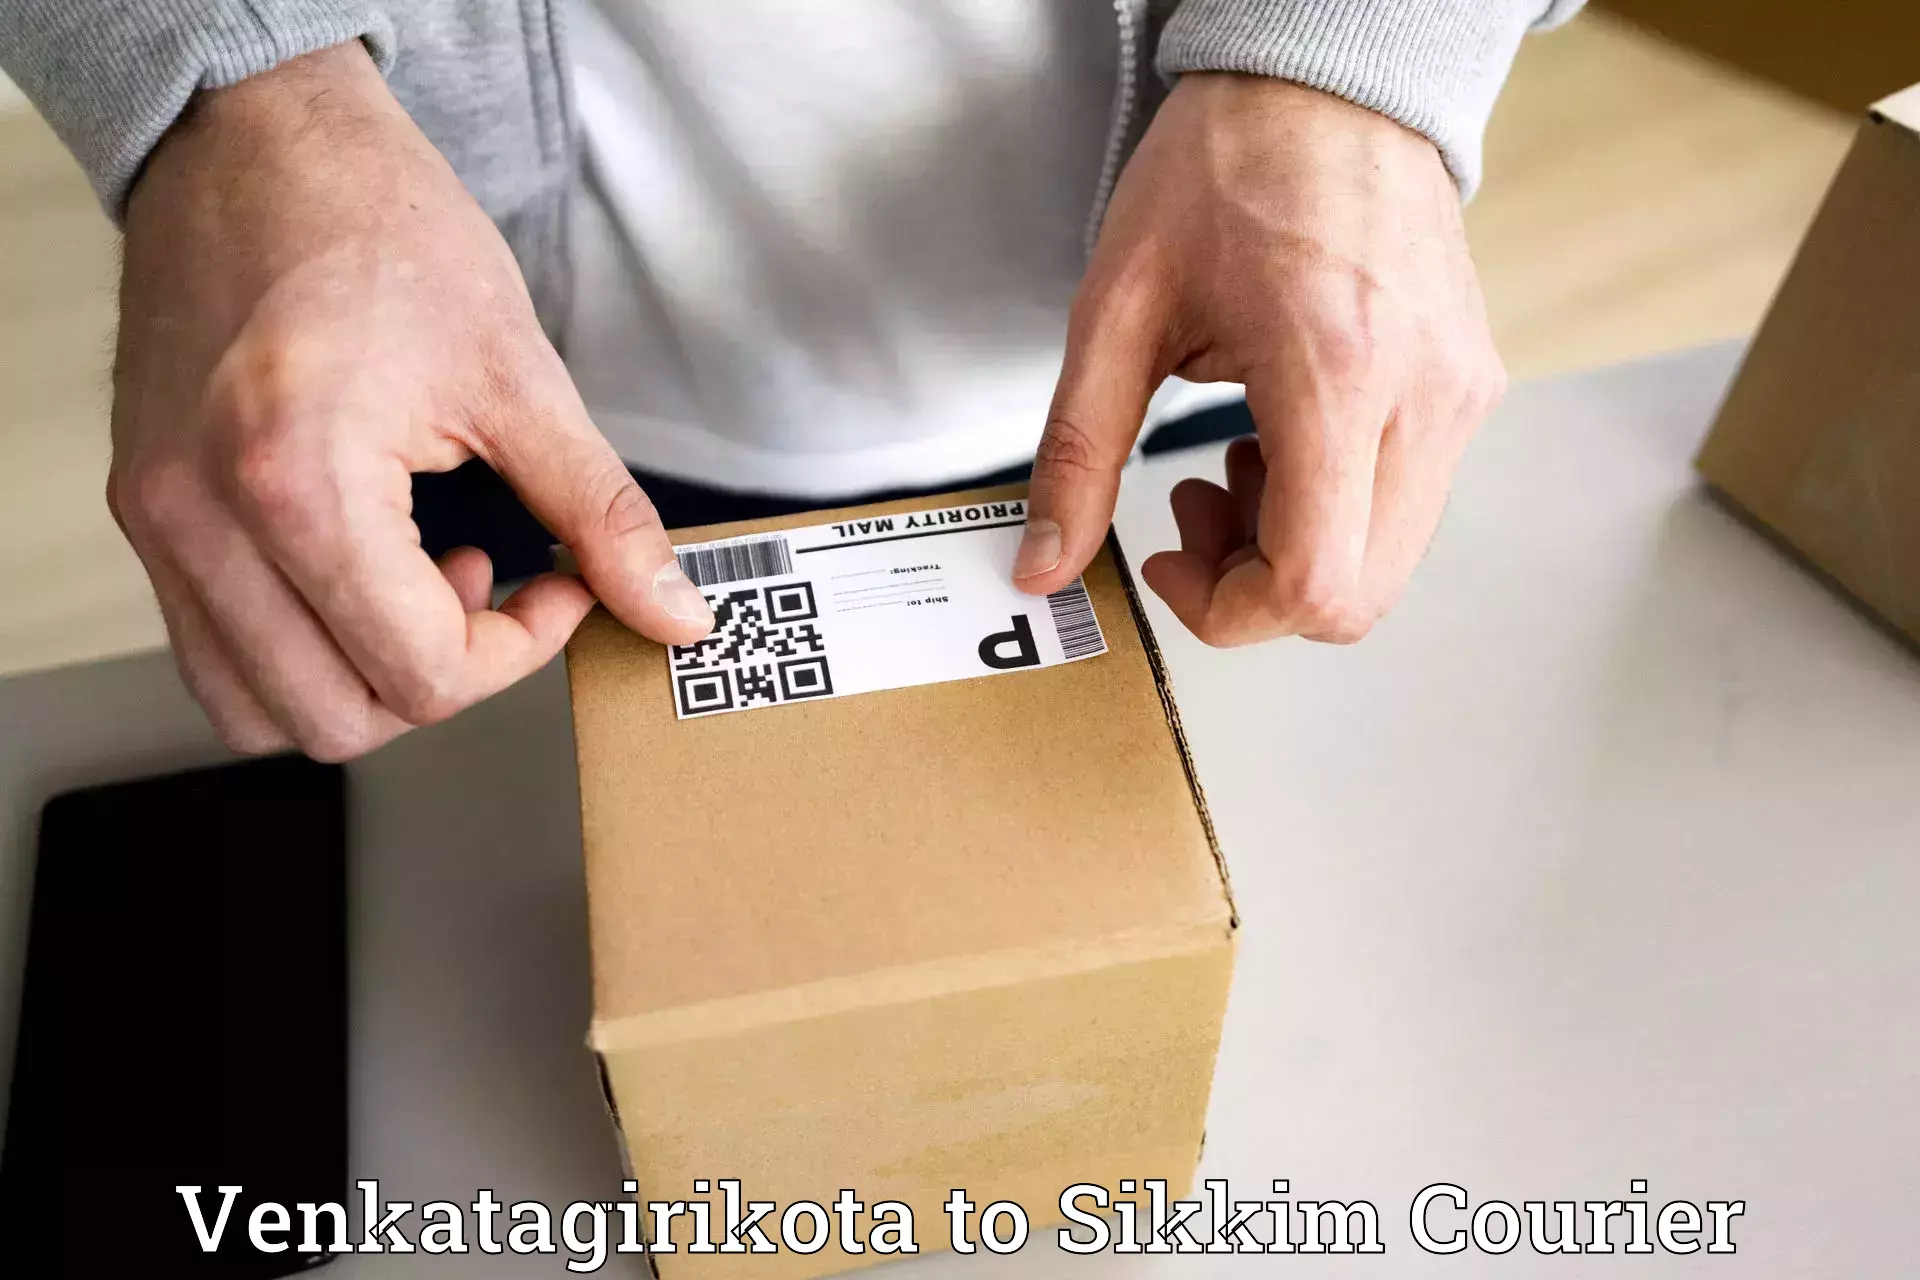 Package tracking Venkatagirikota to Pelling